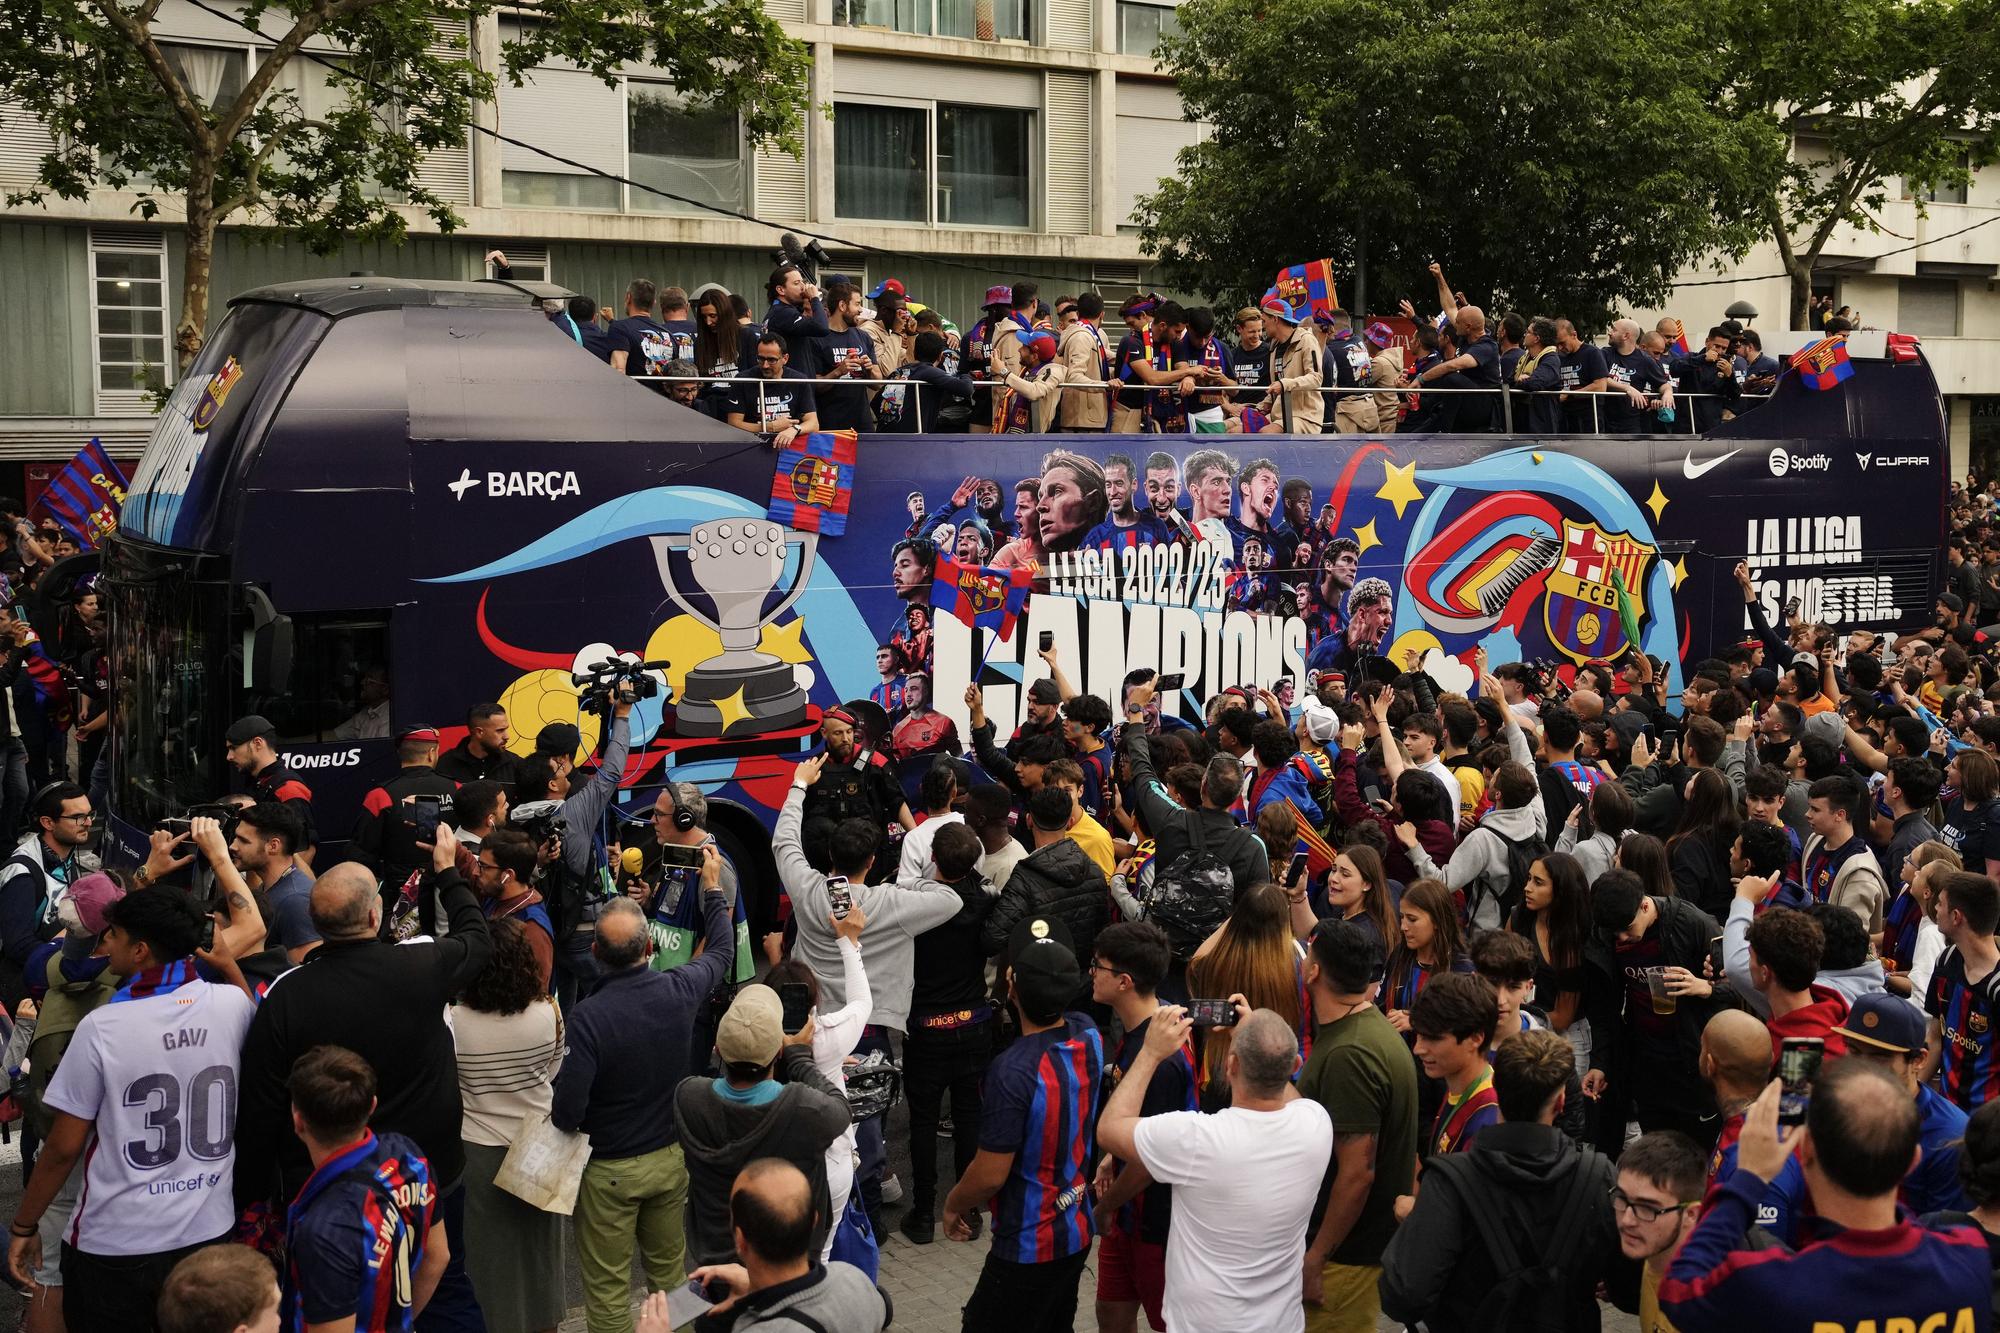 Barça celebrates LaLiga next to the Womens team